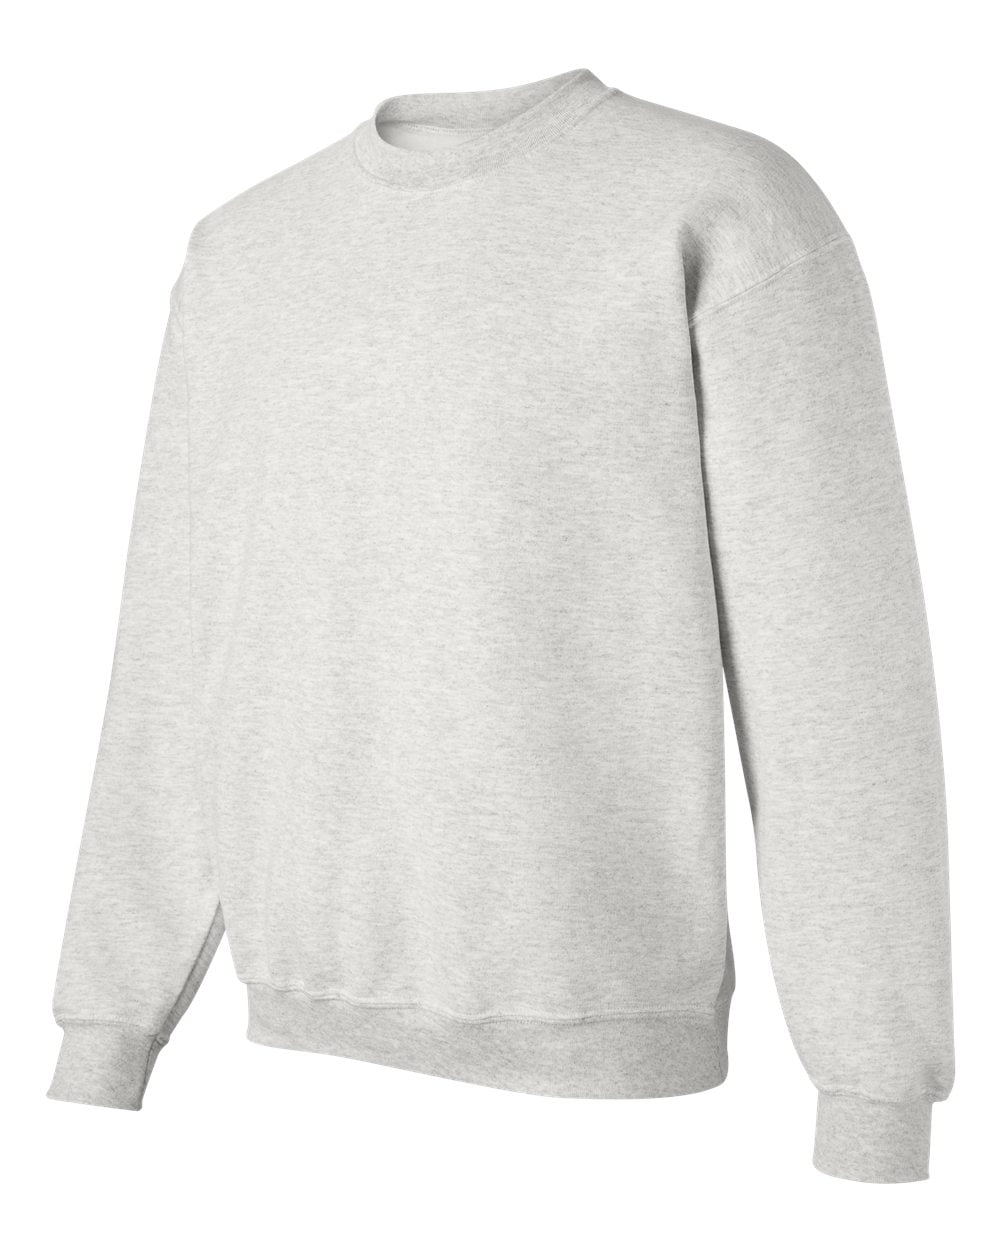 Gildan Crewneck Sweatshirt Walmart Discount, 53% OFF | www 